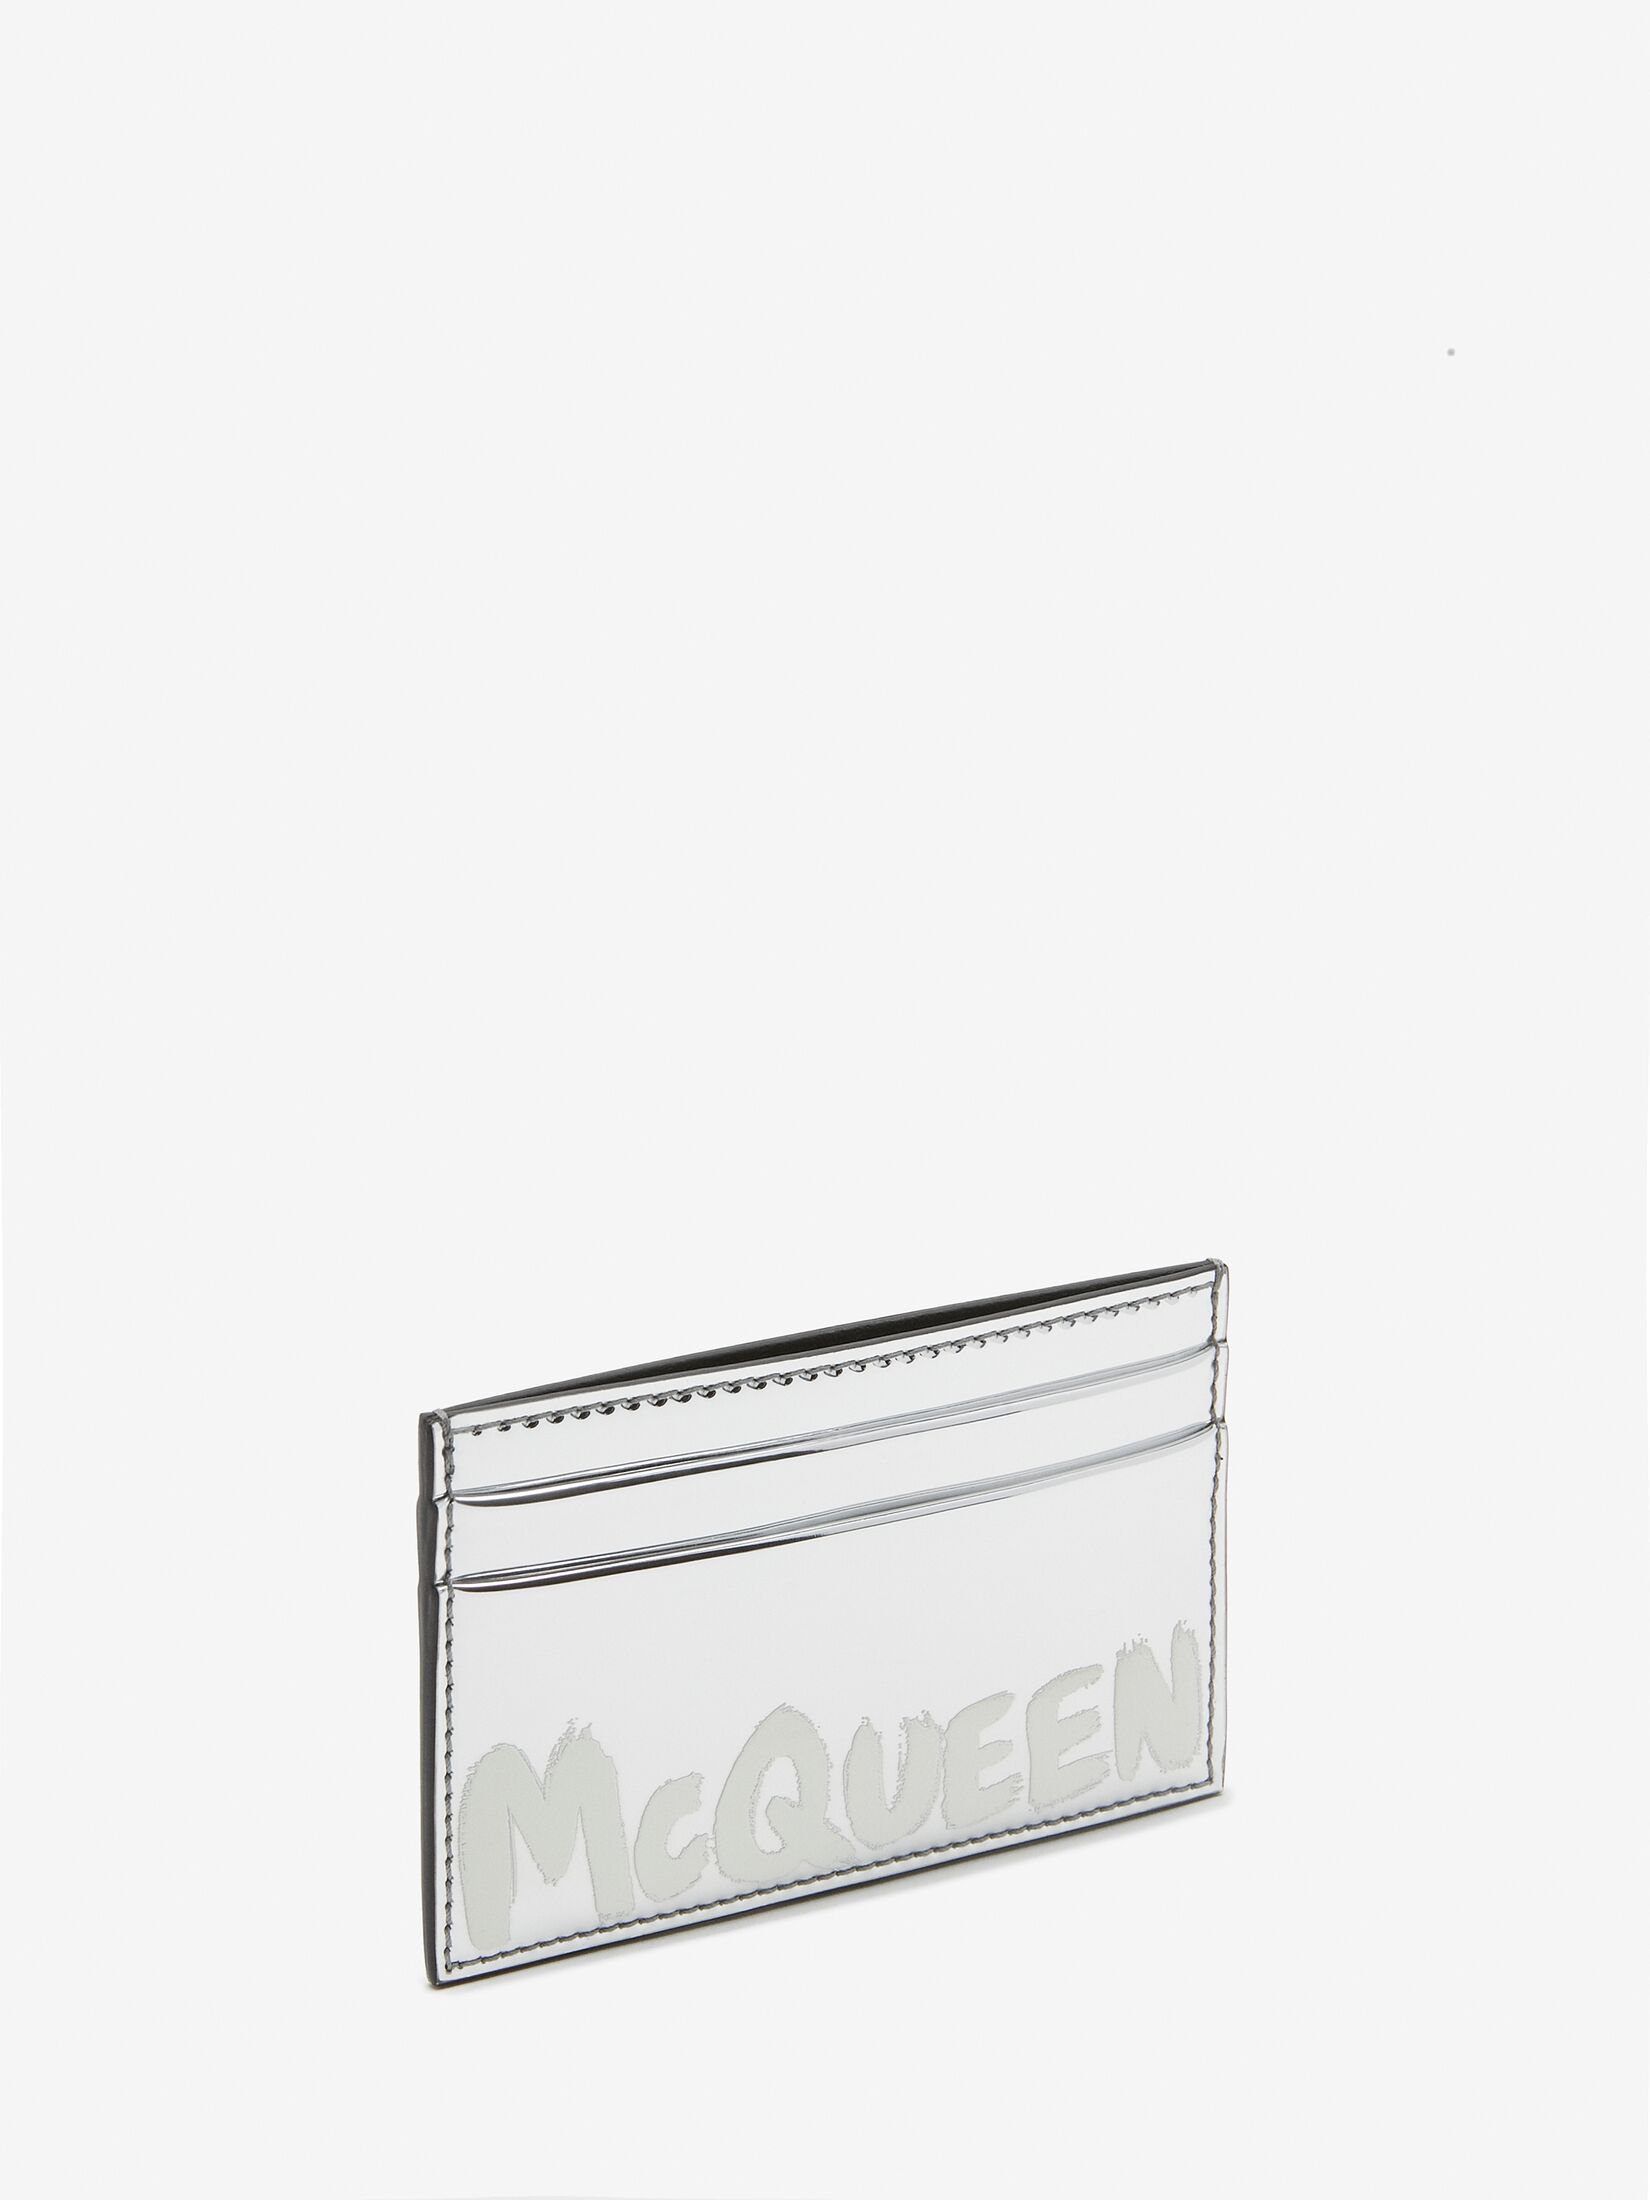 McQueen涂鸦卡包